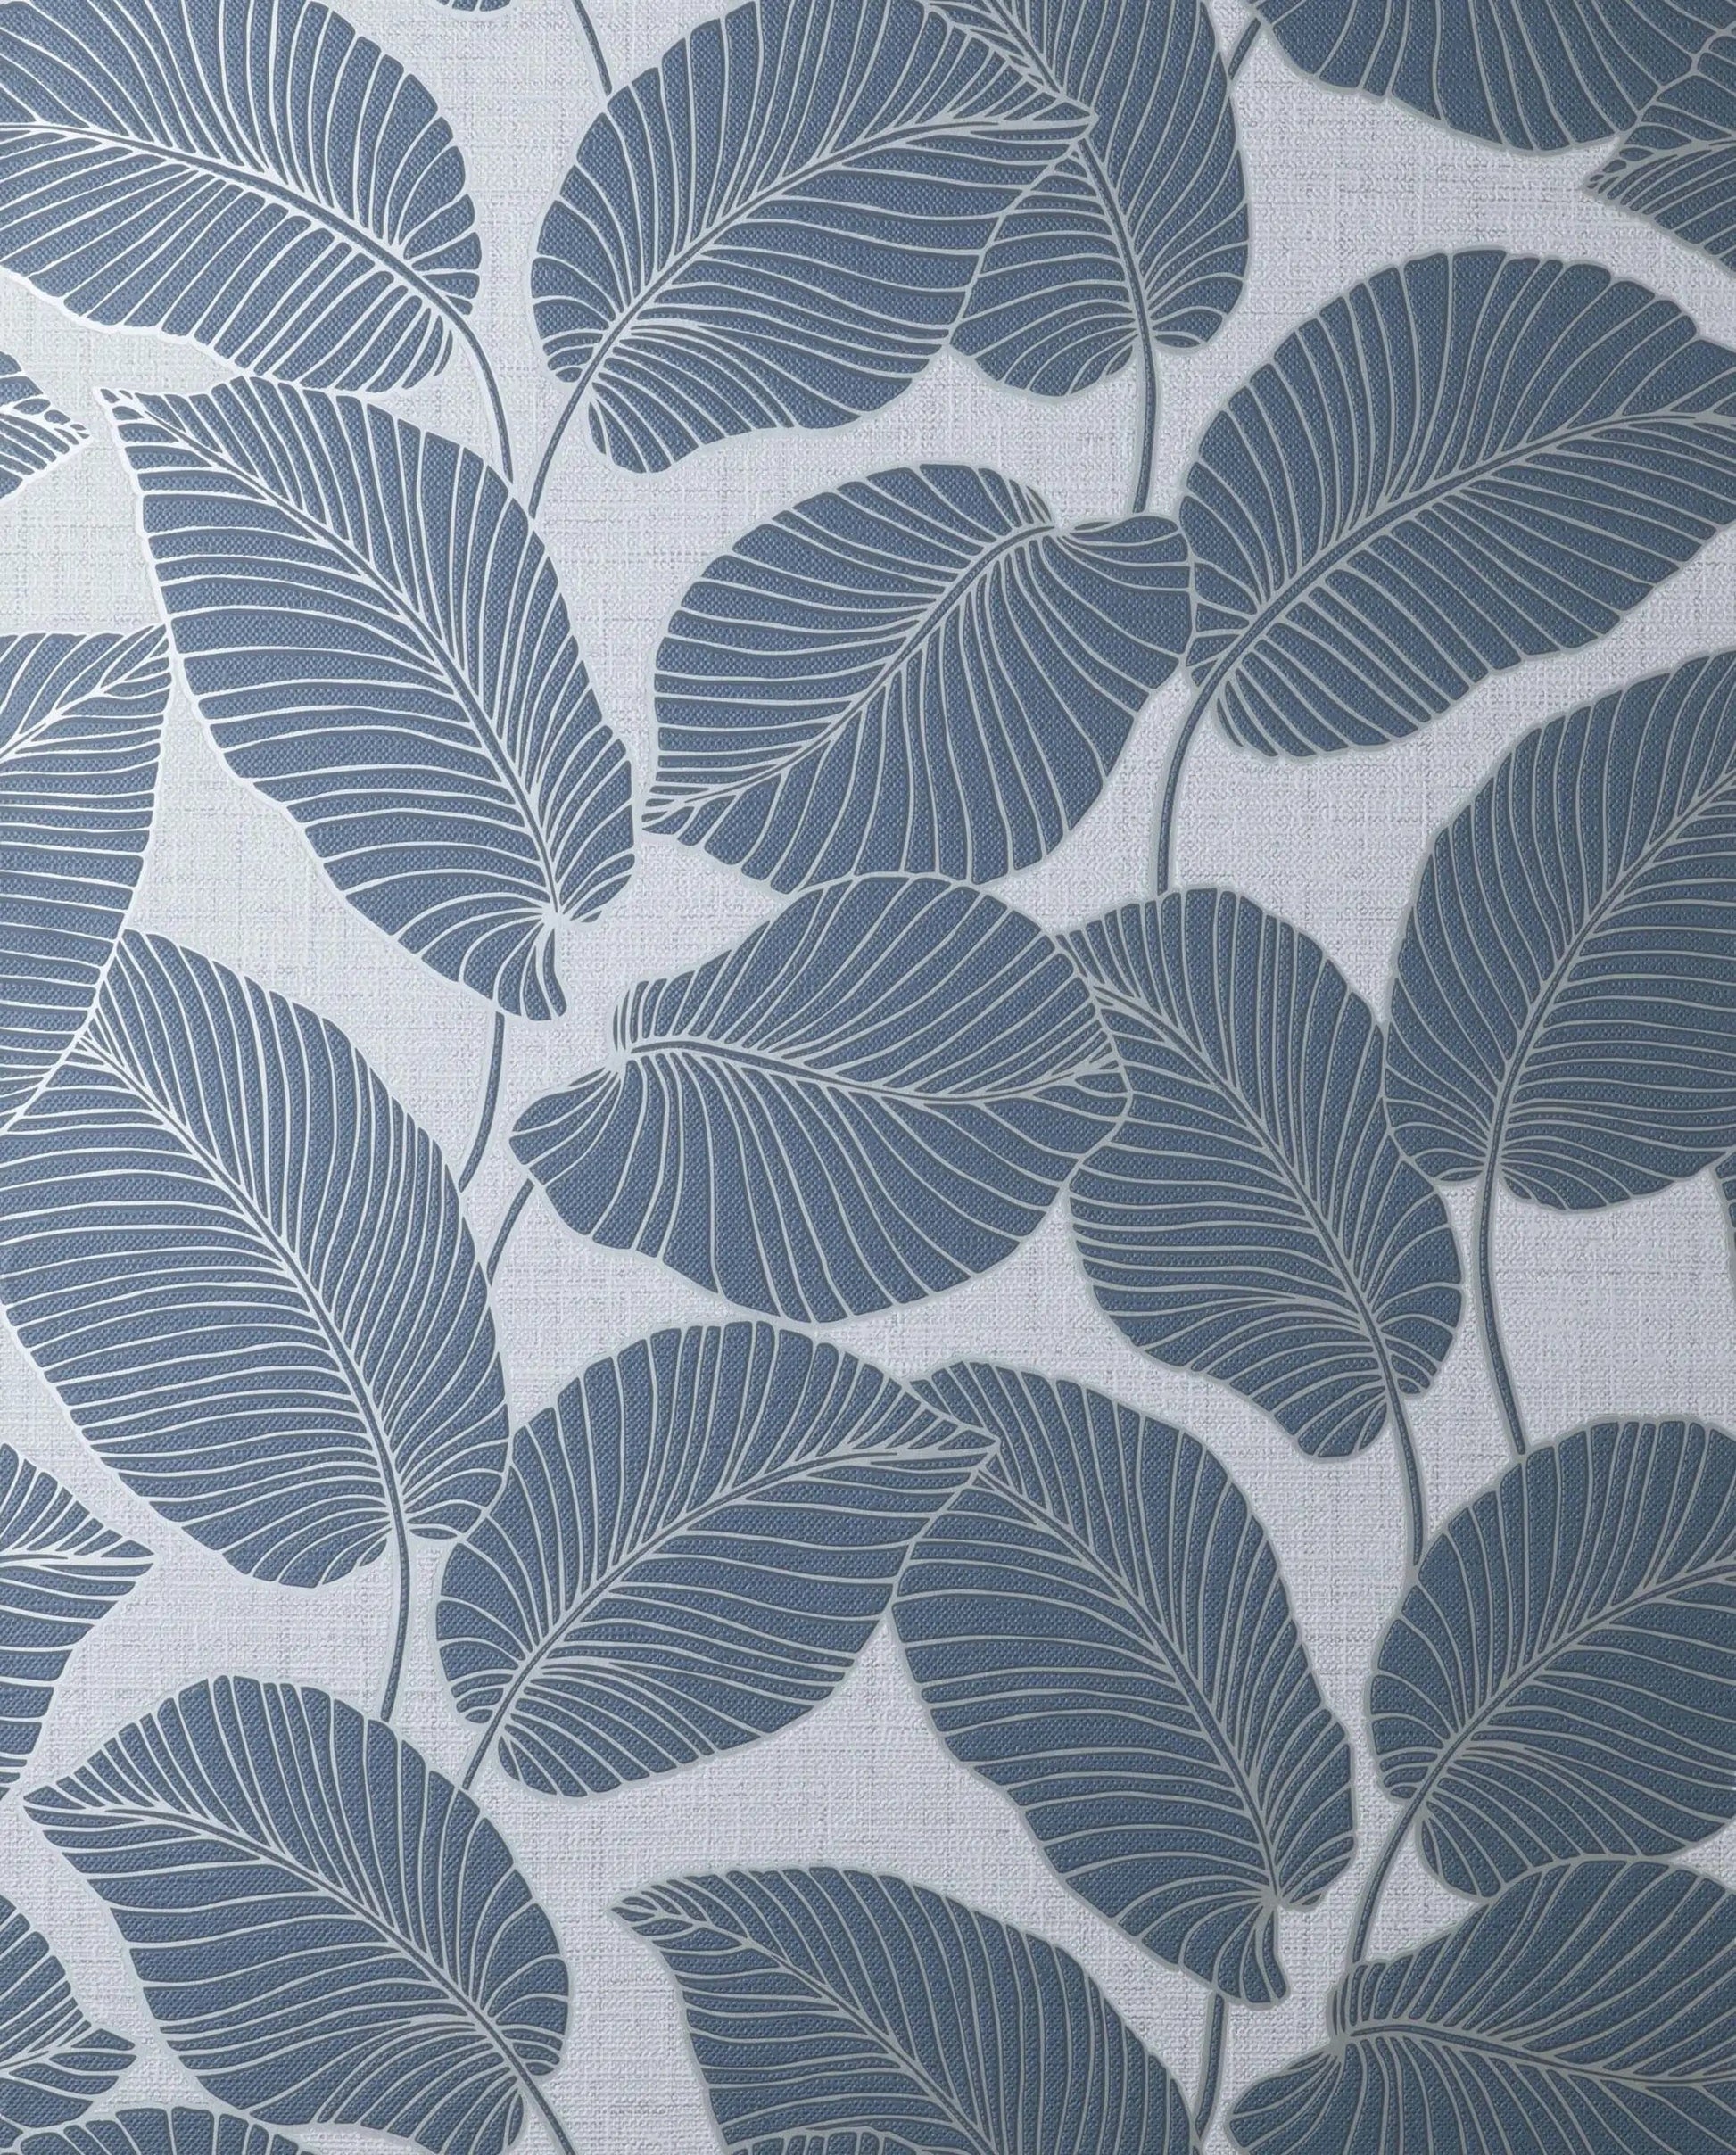 Wallpaper  -  Fine Decor Cascade Leaf Wallpaper - FD42820  -  60000851